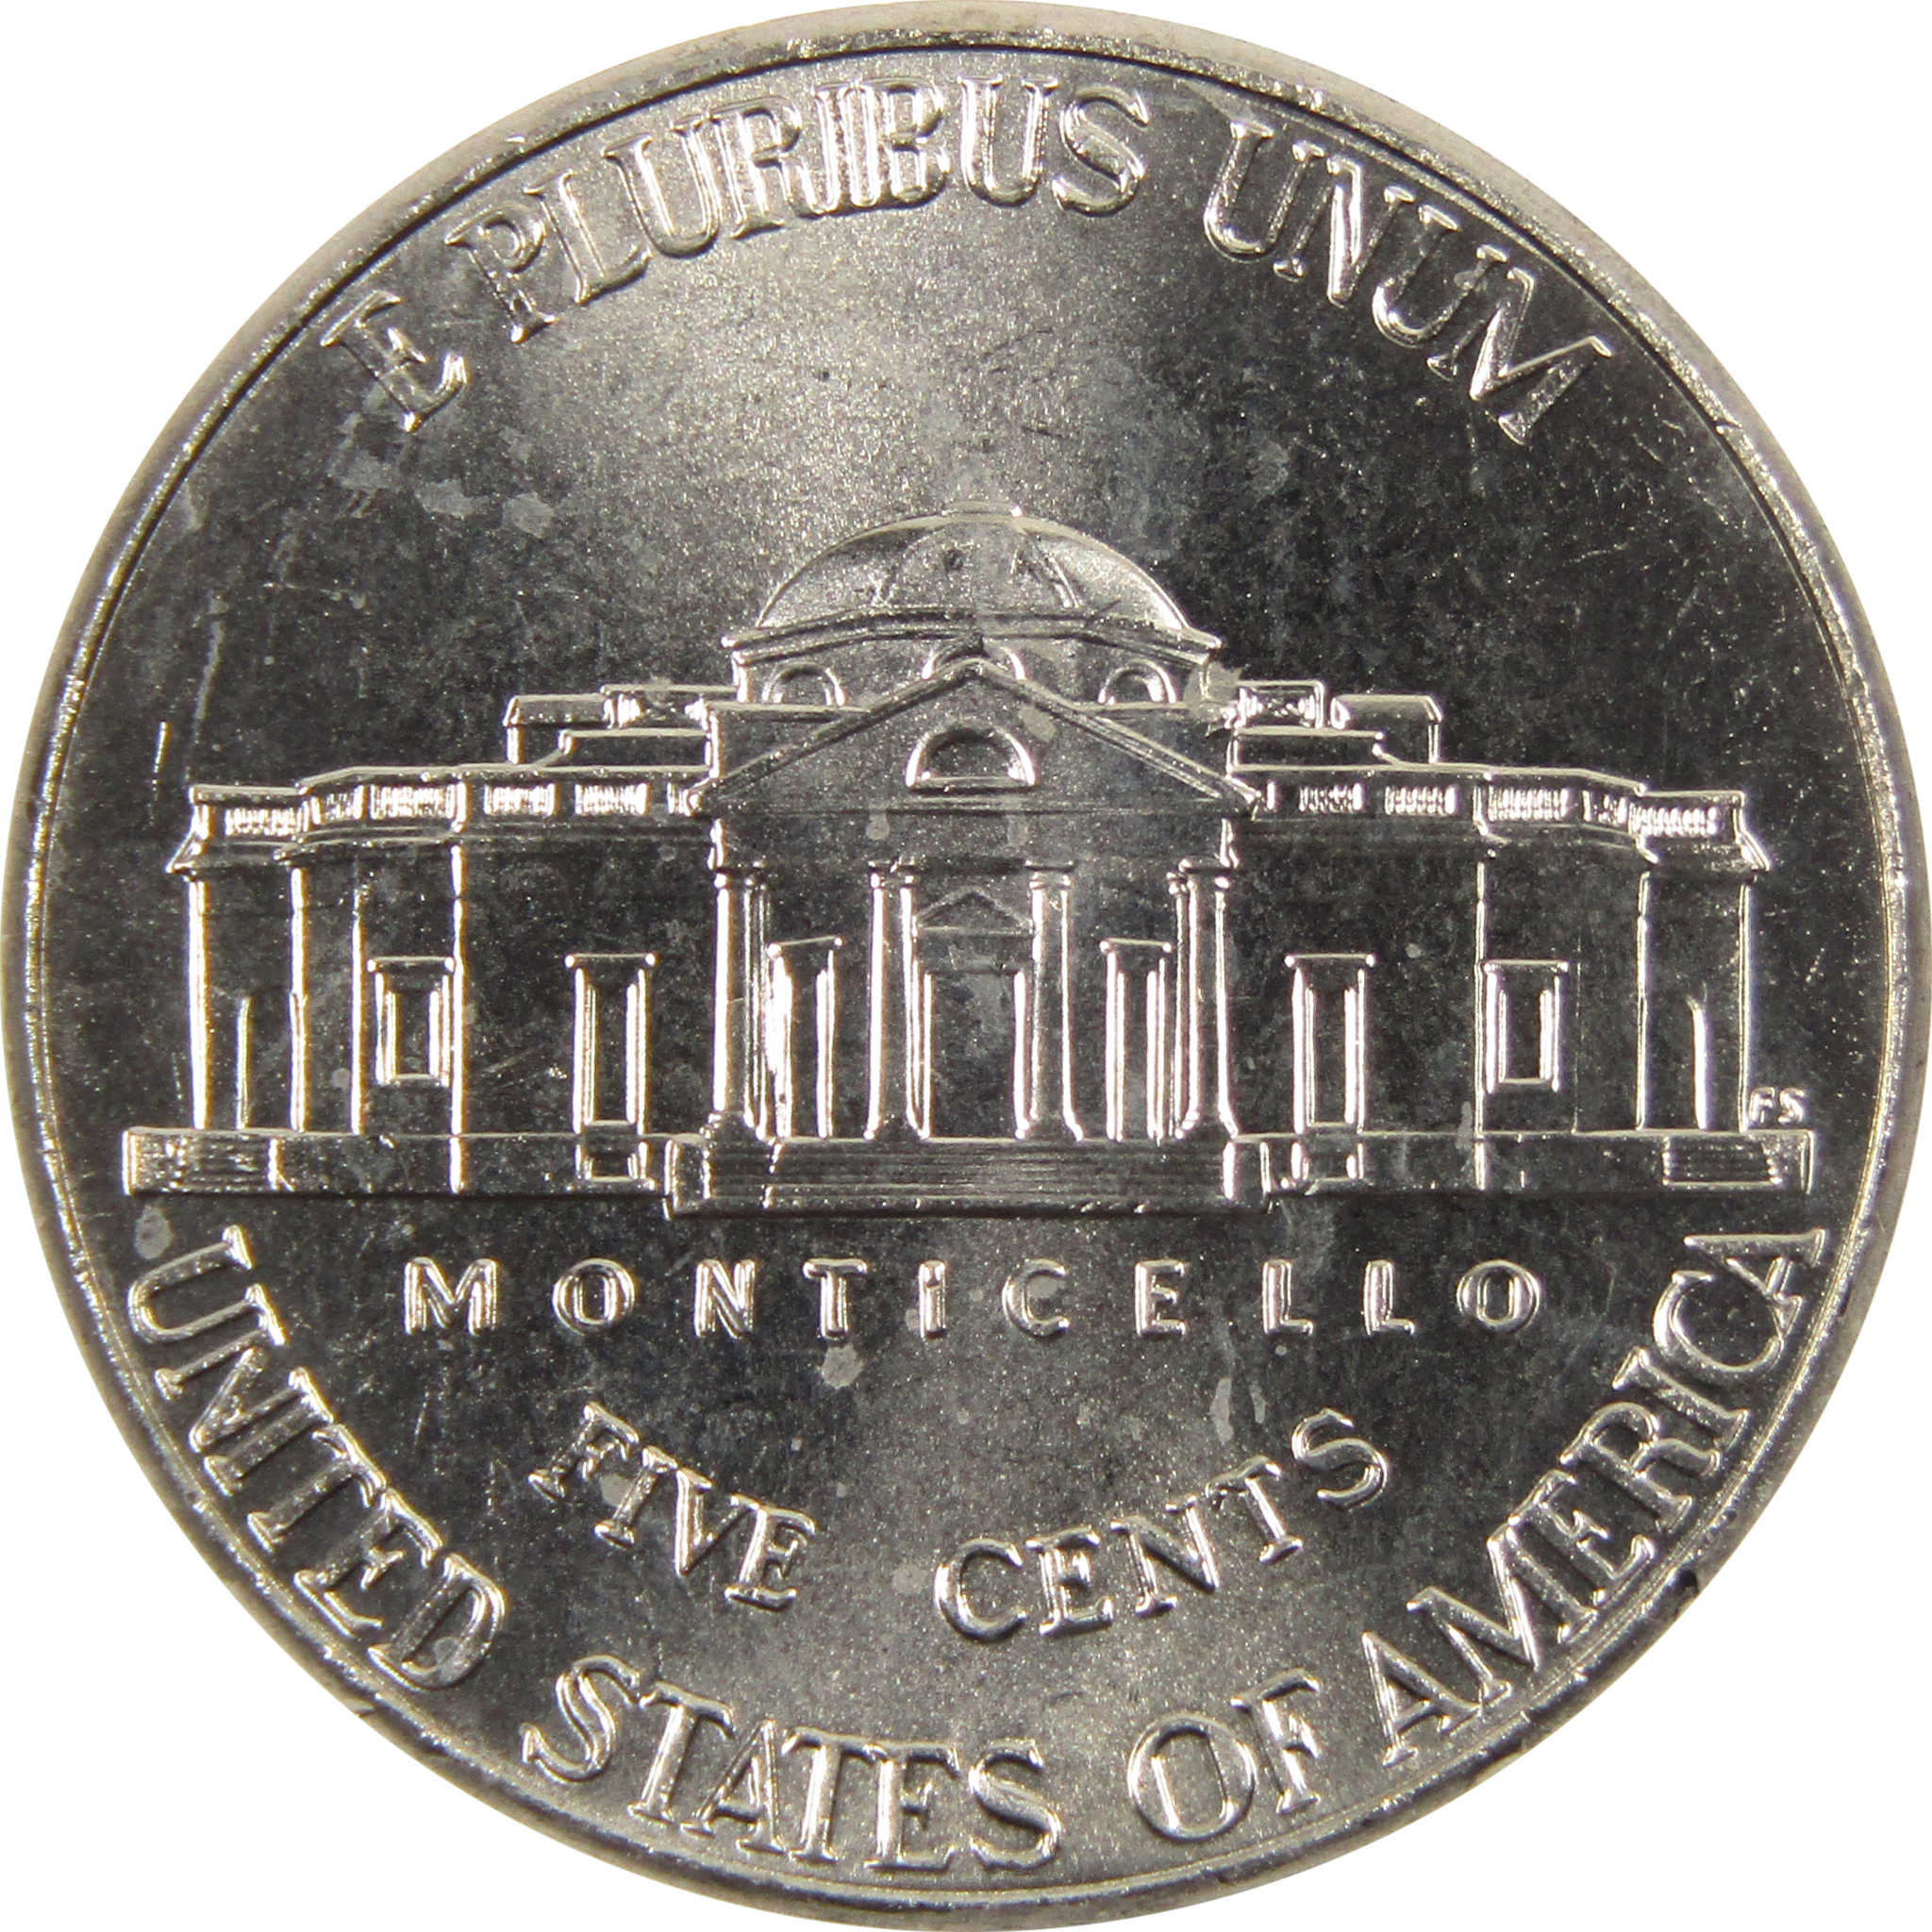 2017 P Jefferson Nickel BU Uncirculated 5c Coin